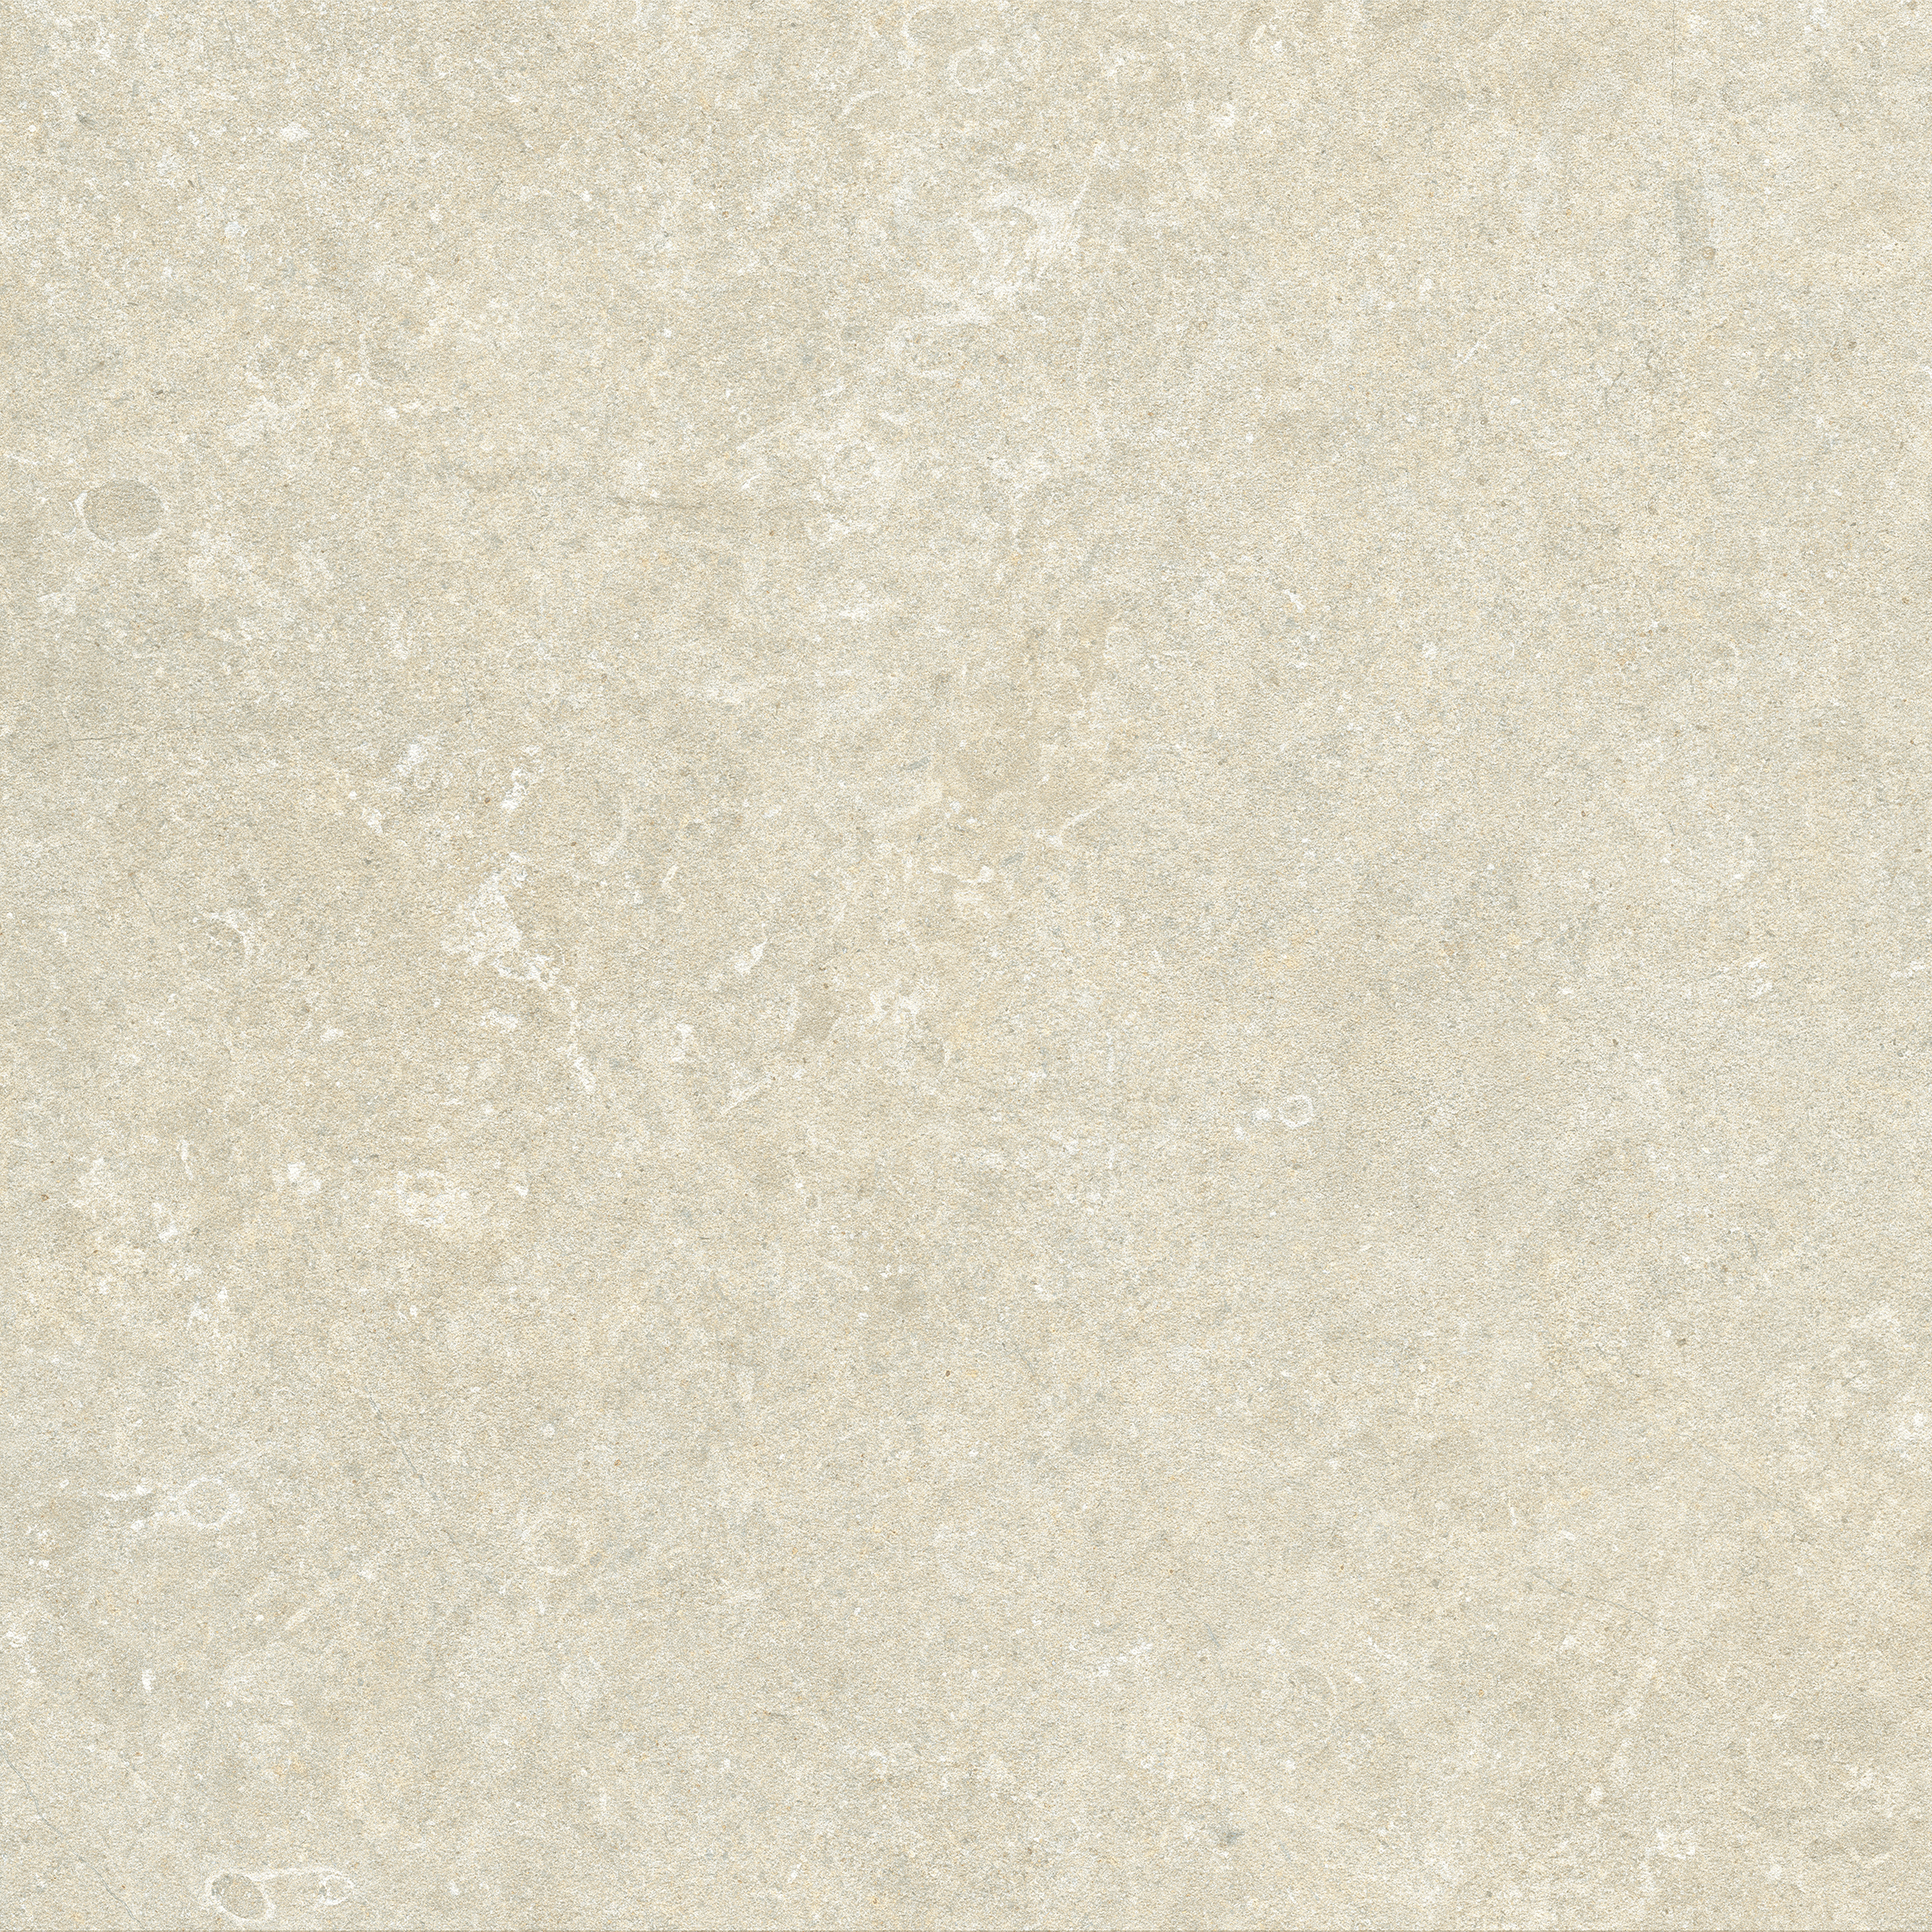 Marca Corona Arkistyle Clay Naturale – Matt J216 naturale – matt 60x60cm rectified 9mm